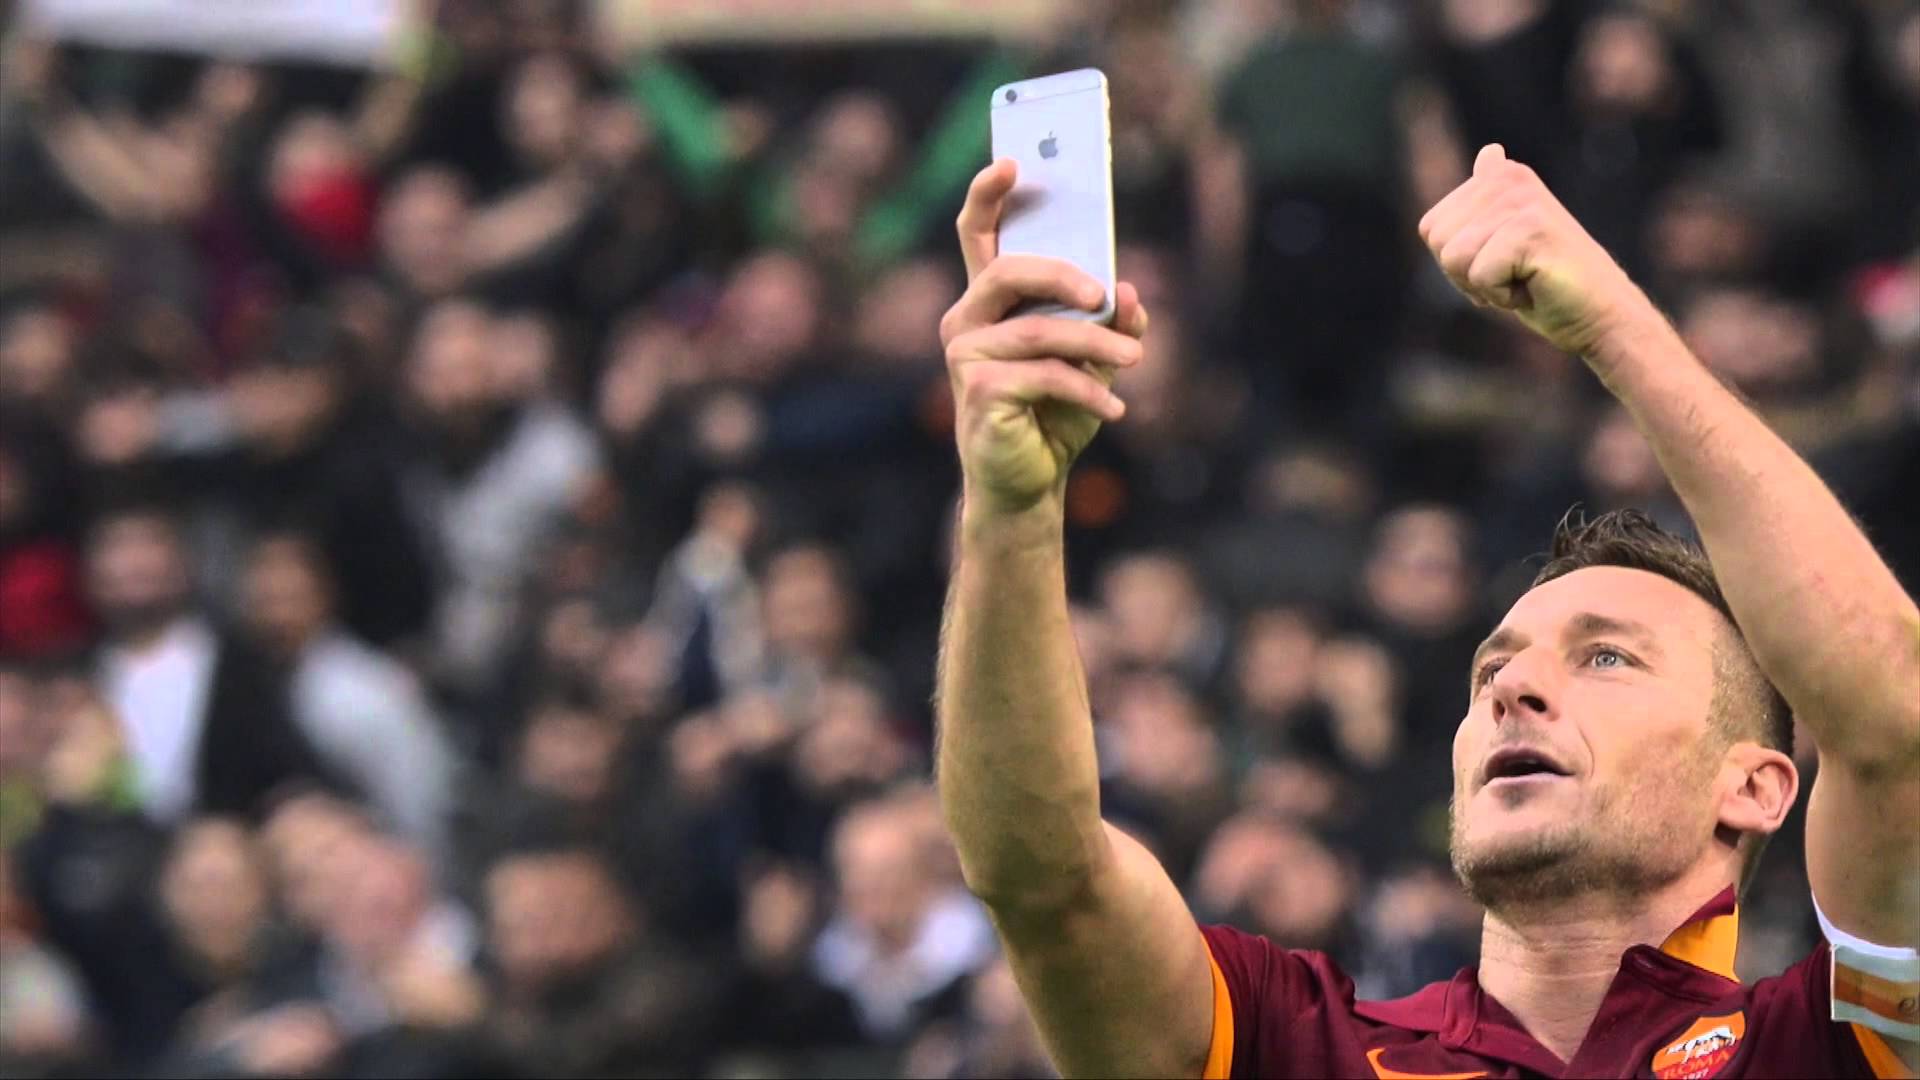 Francesco Totti HD Image whb 1 #FrancescoTottiHDimage